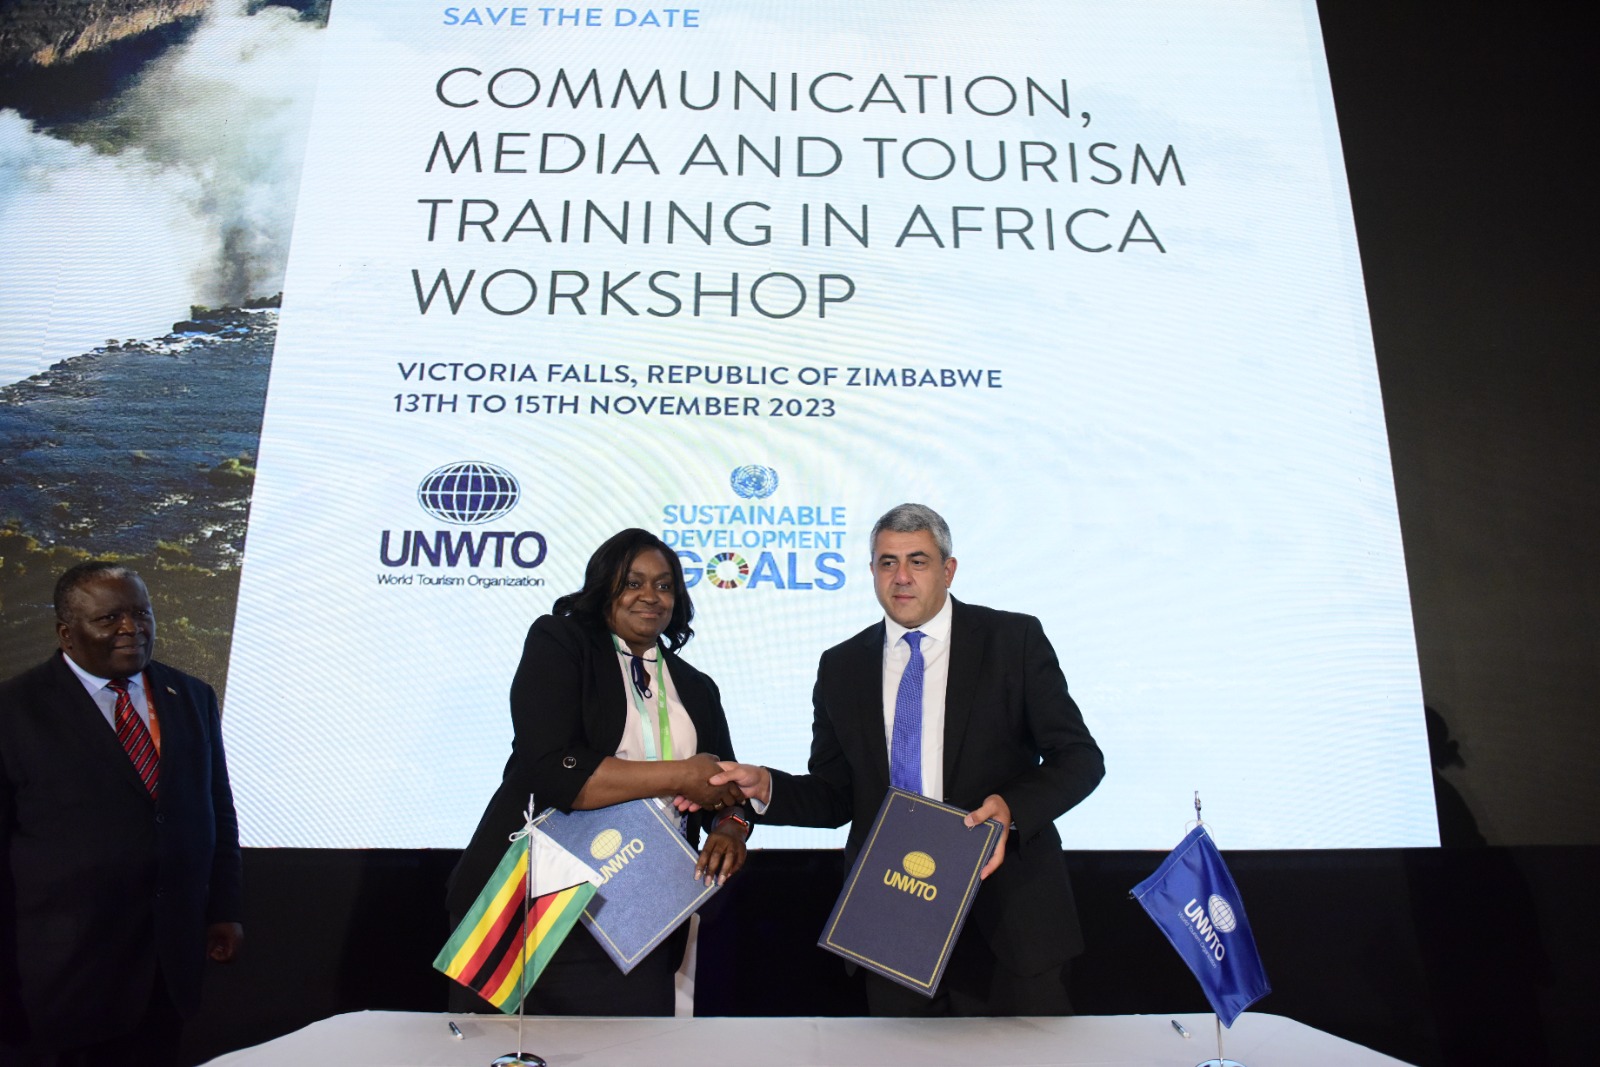 UNWTO endorses Zimbabwe to host Communication, Media and Tourism Training in Africa